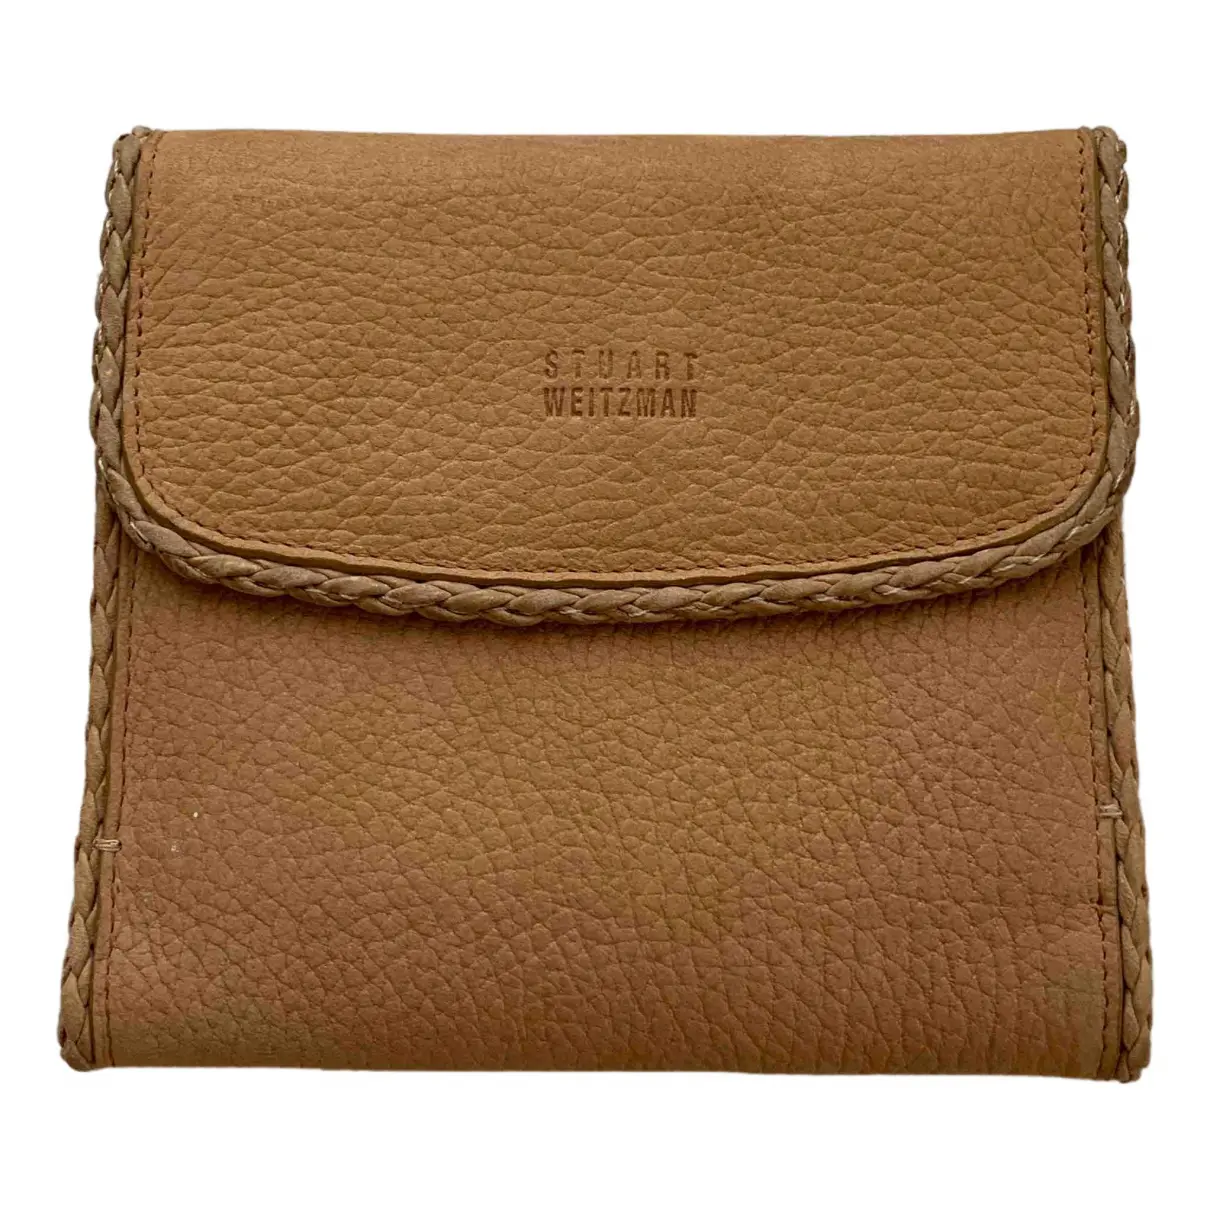 Leather wallet Stuart Weitzman